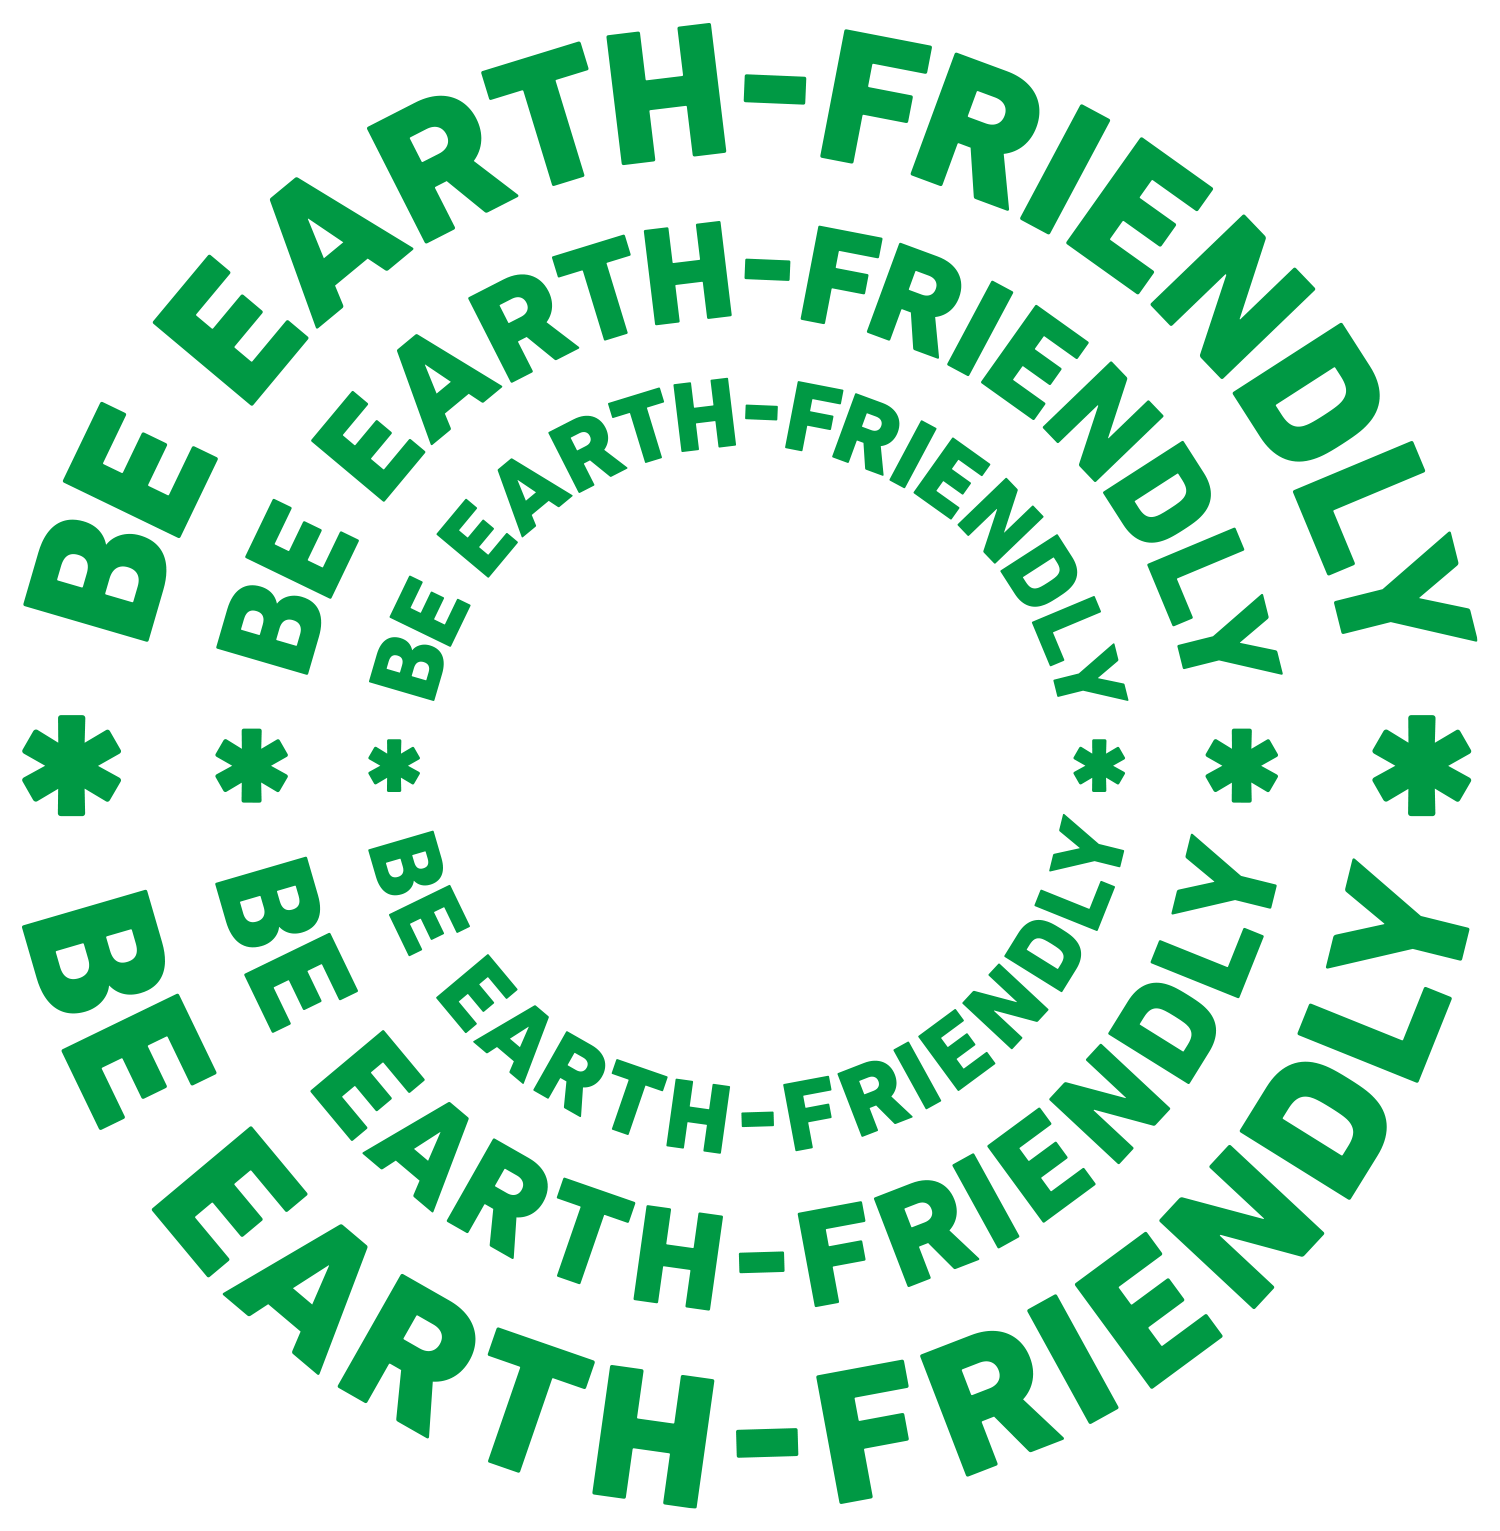 BE EARTH-FRIENDLY